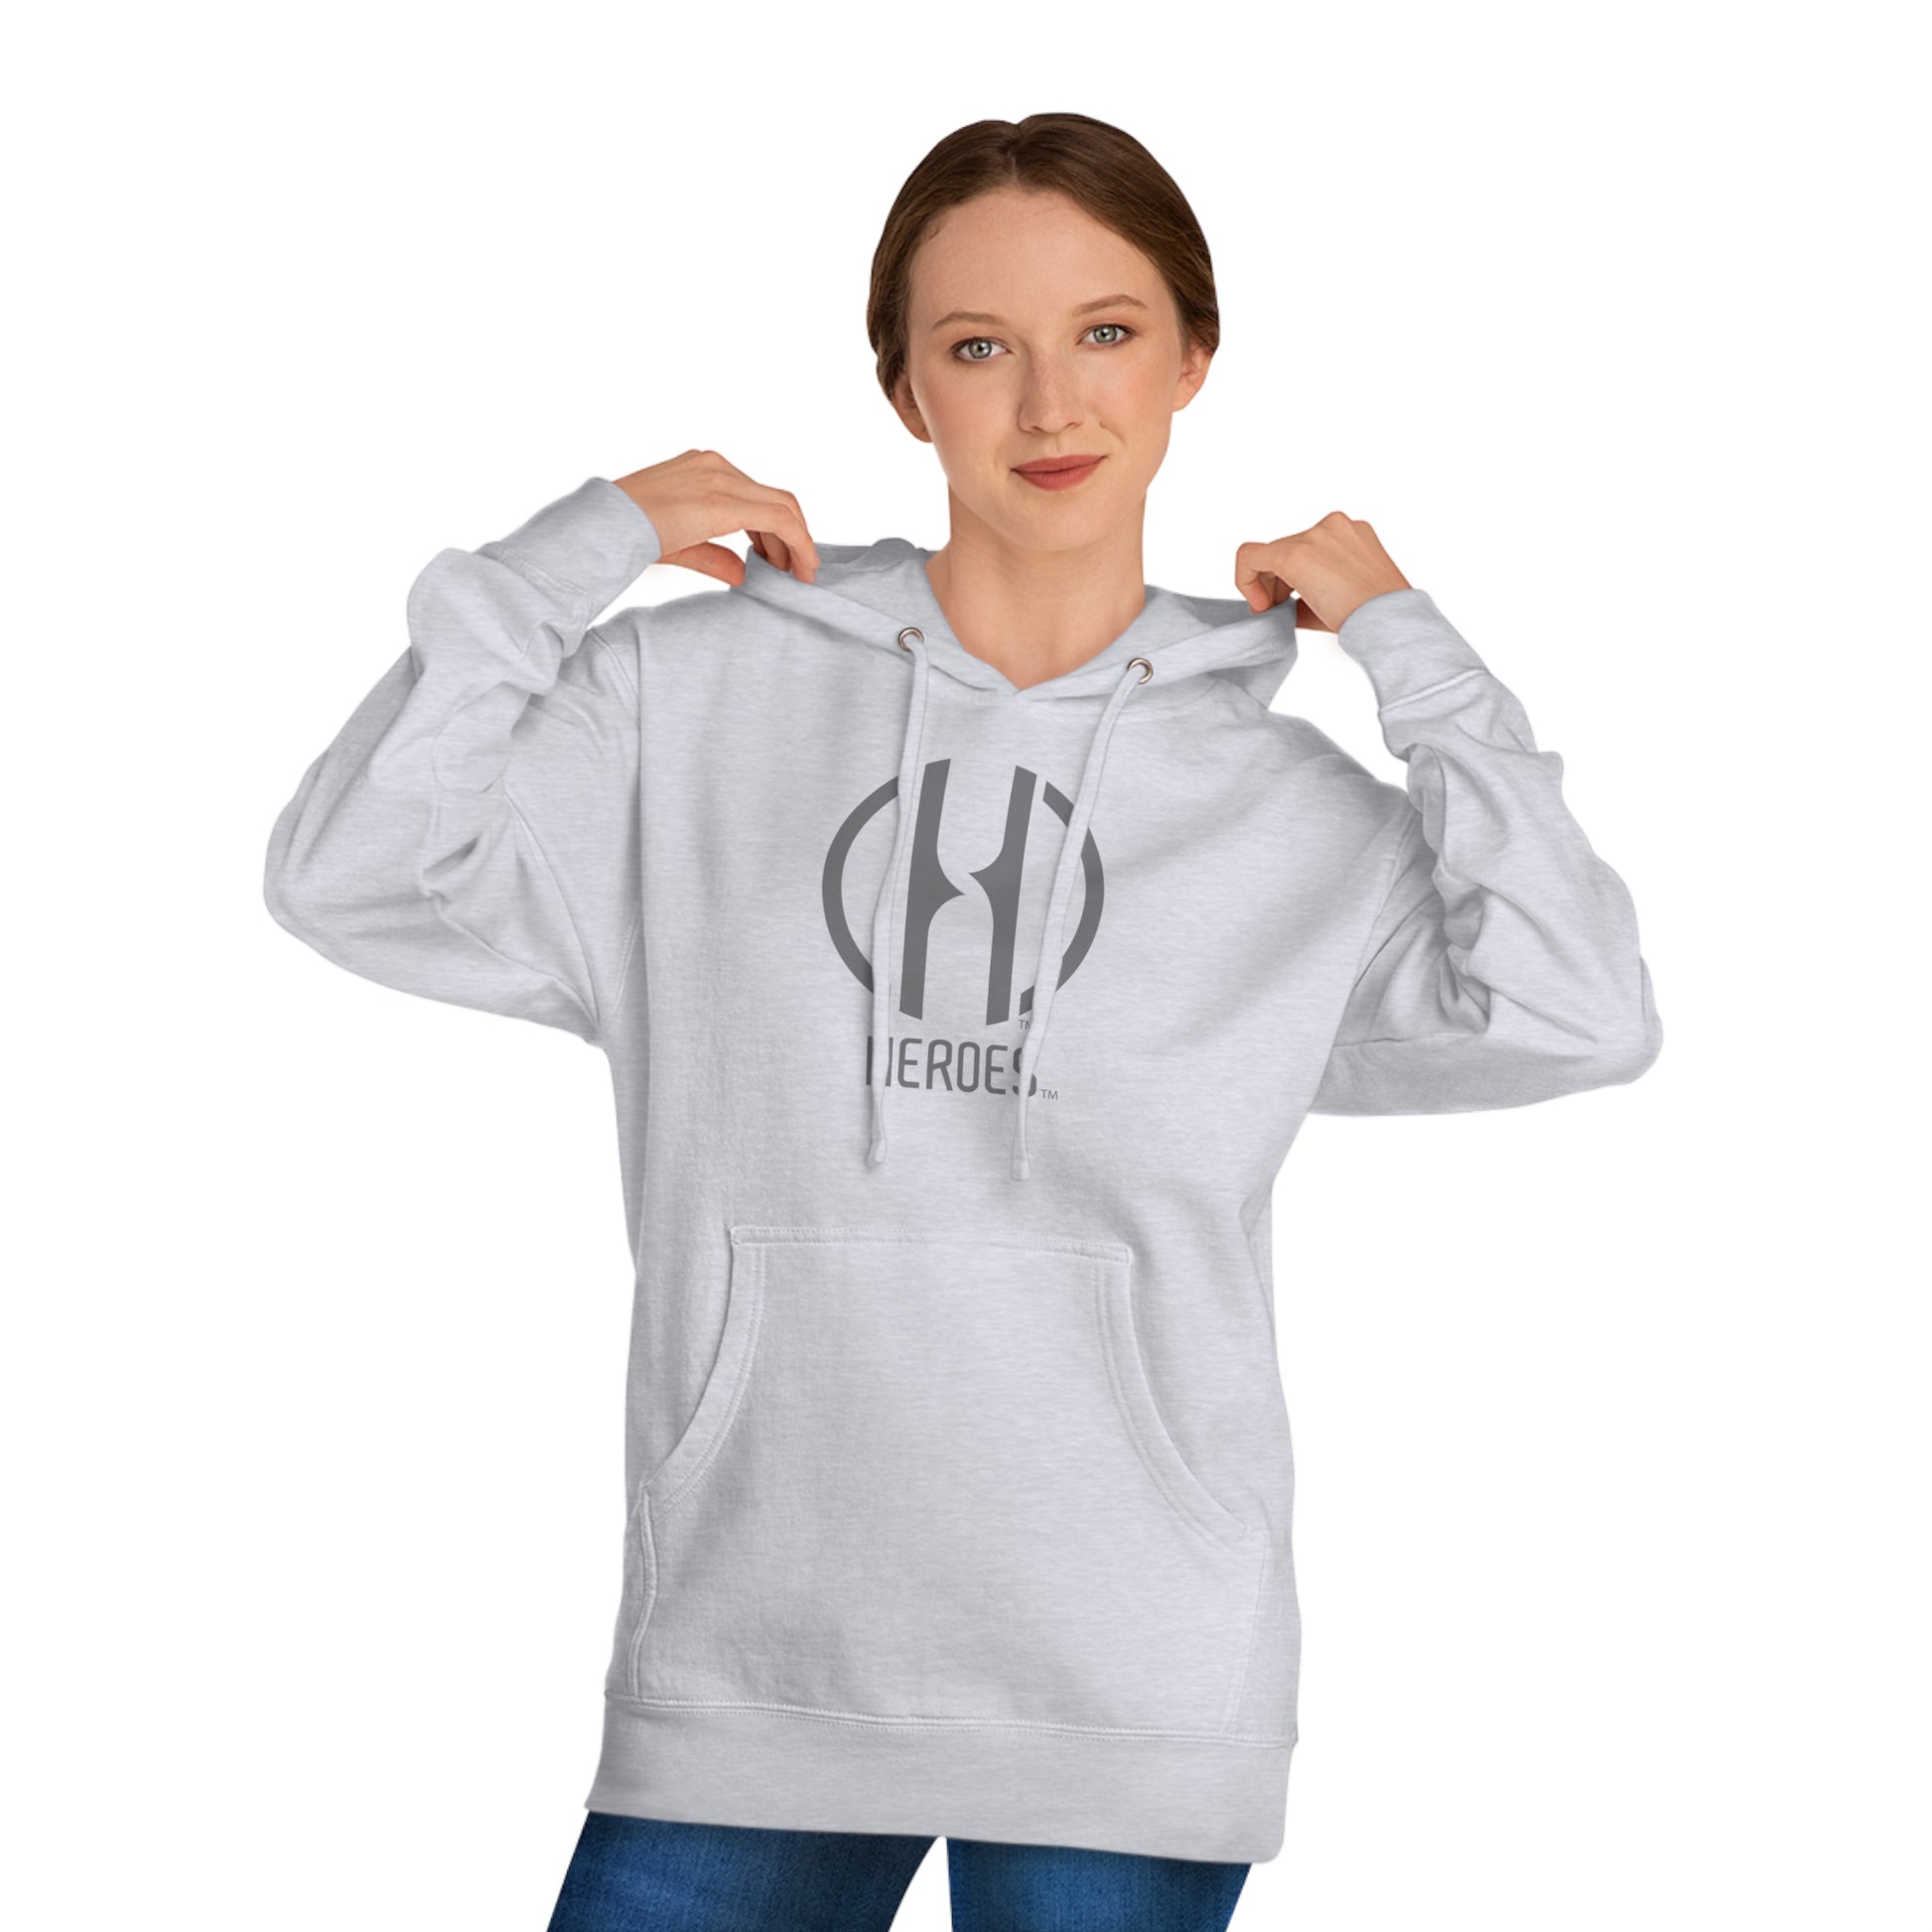 HEROES Unisex Hooded Sweatshirt - Making It Happen Foundation Inc.